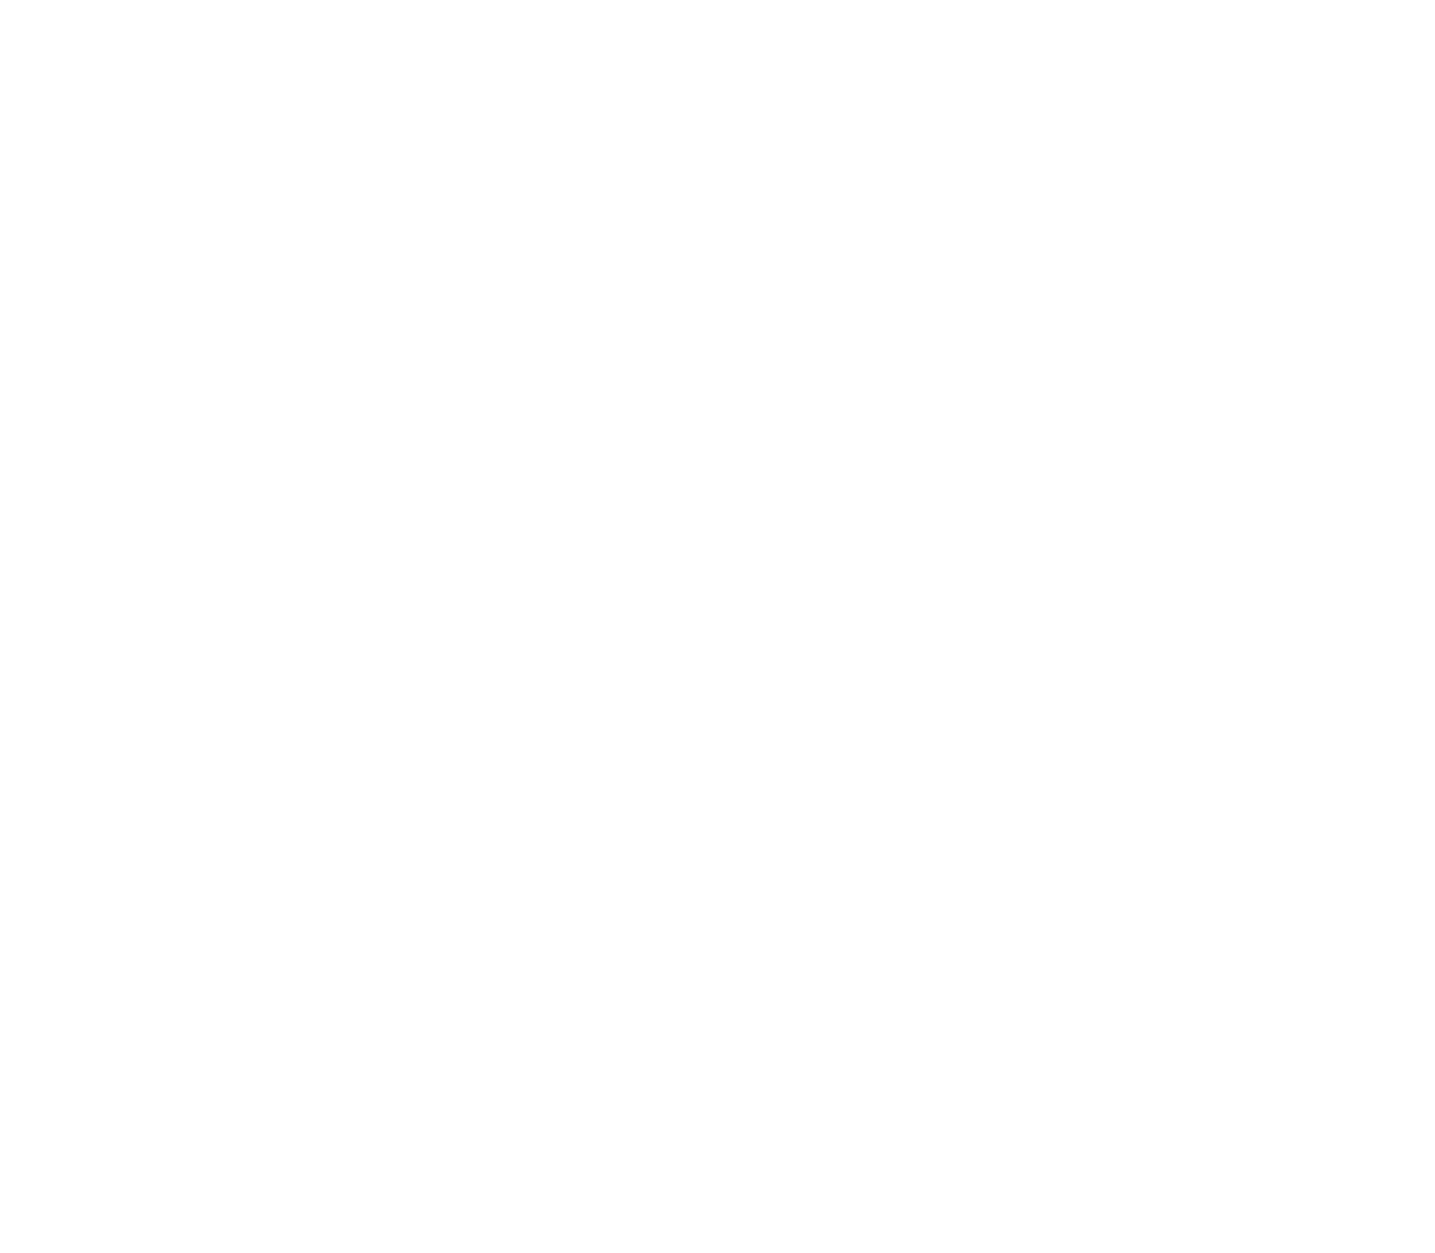 The_One_Club_for_Creativity-logo_white